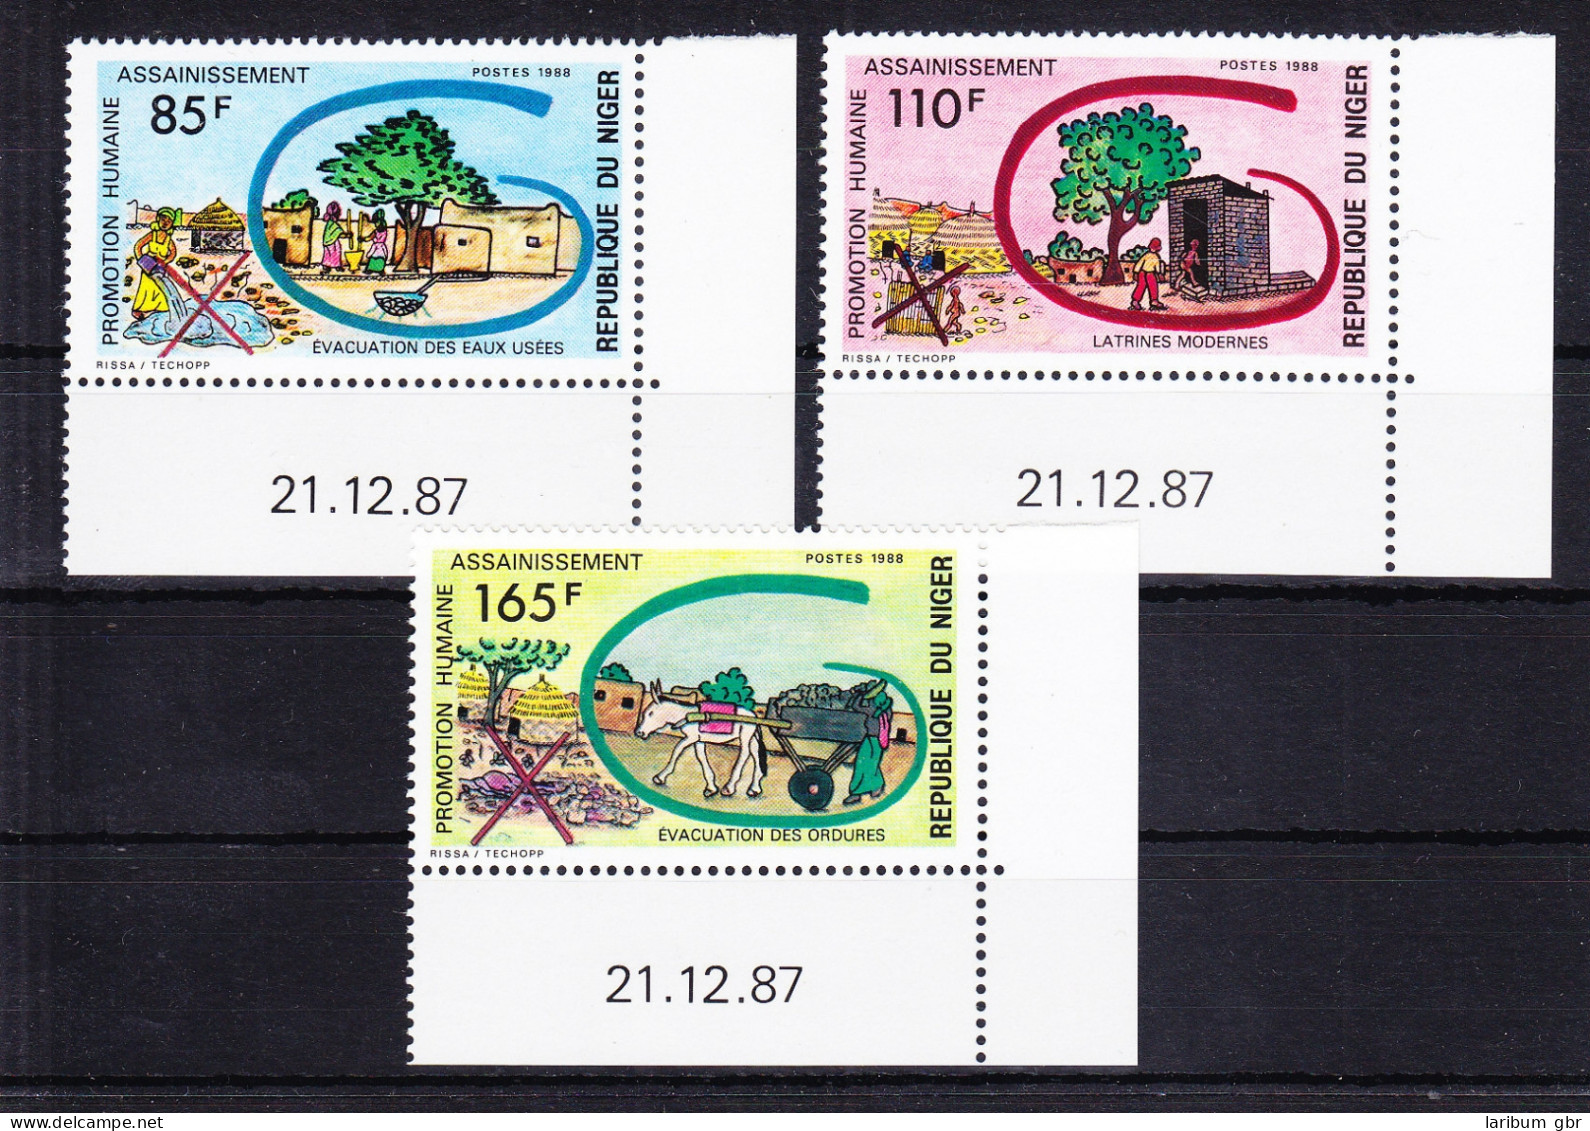 Niger 1039-1041 Postfrisch Entsorgungseinrichtung, MNH #RB730 - Níger (1960-...)